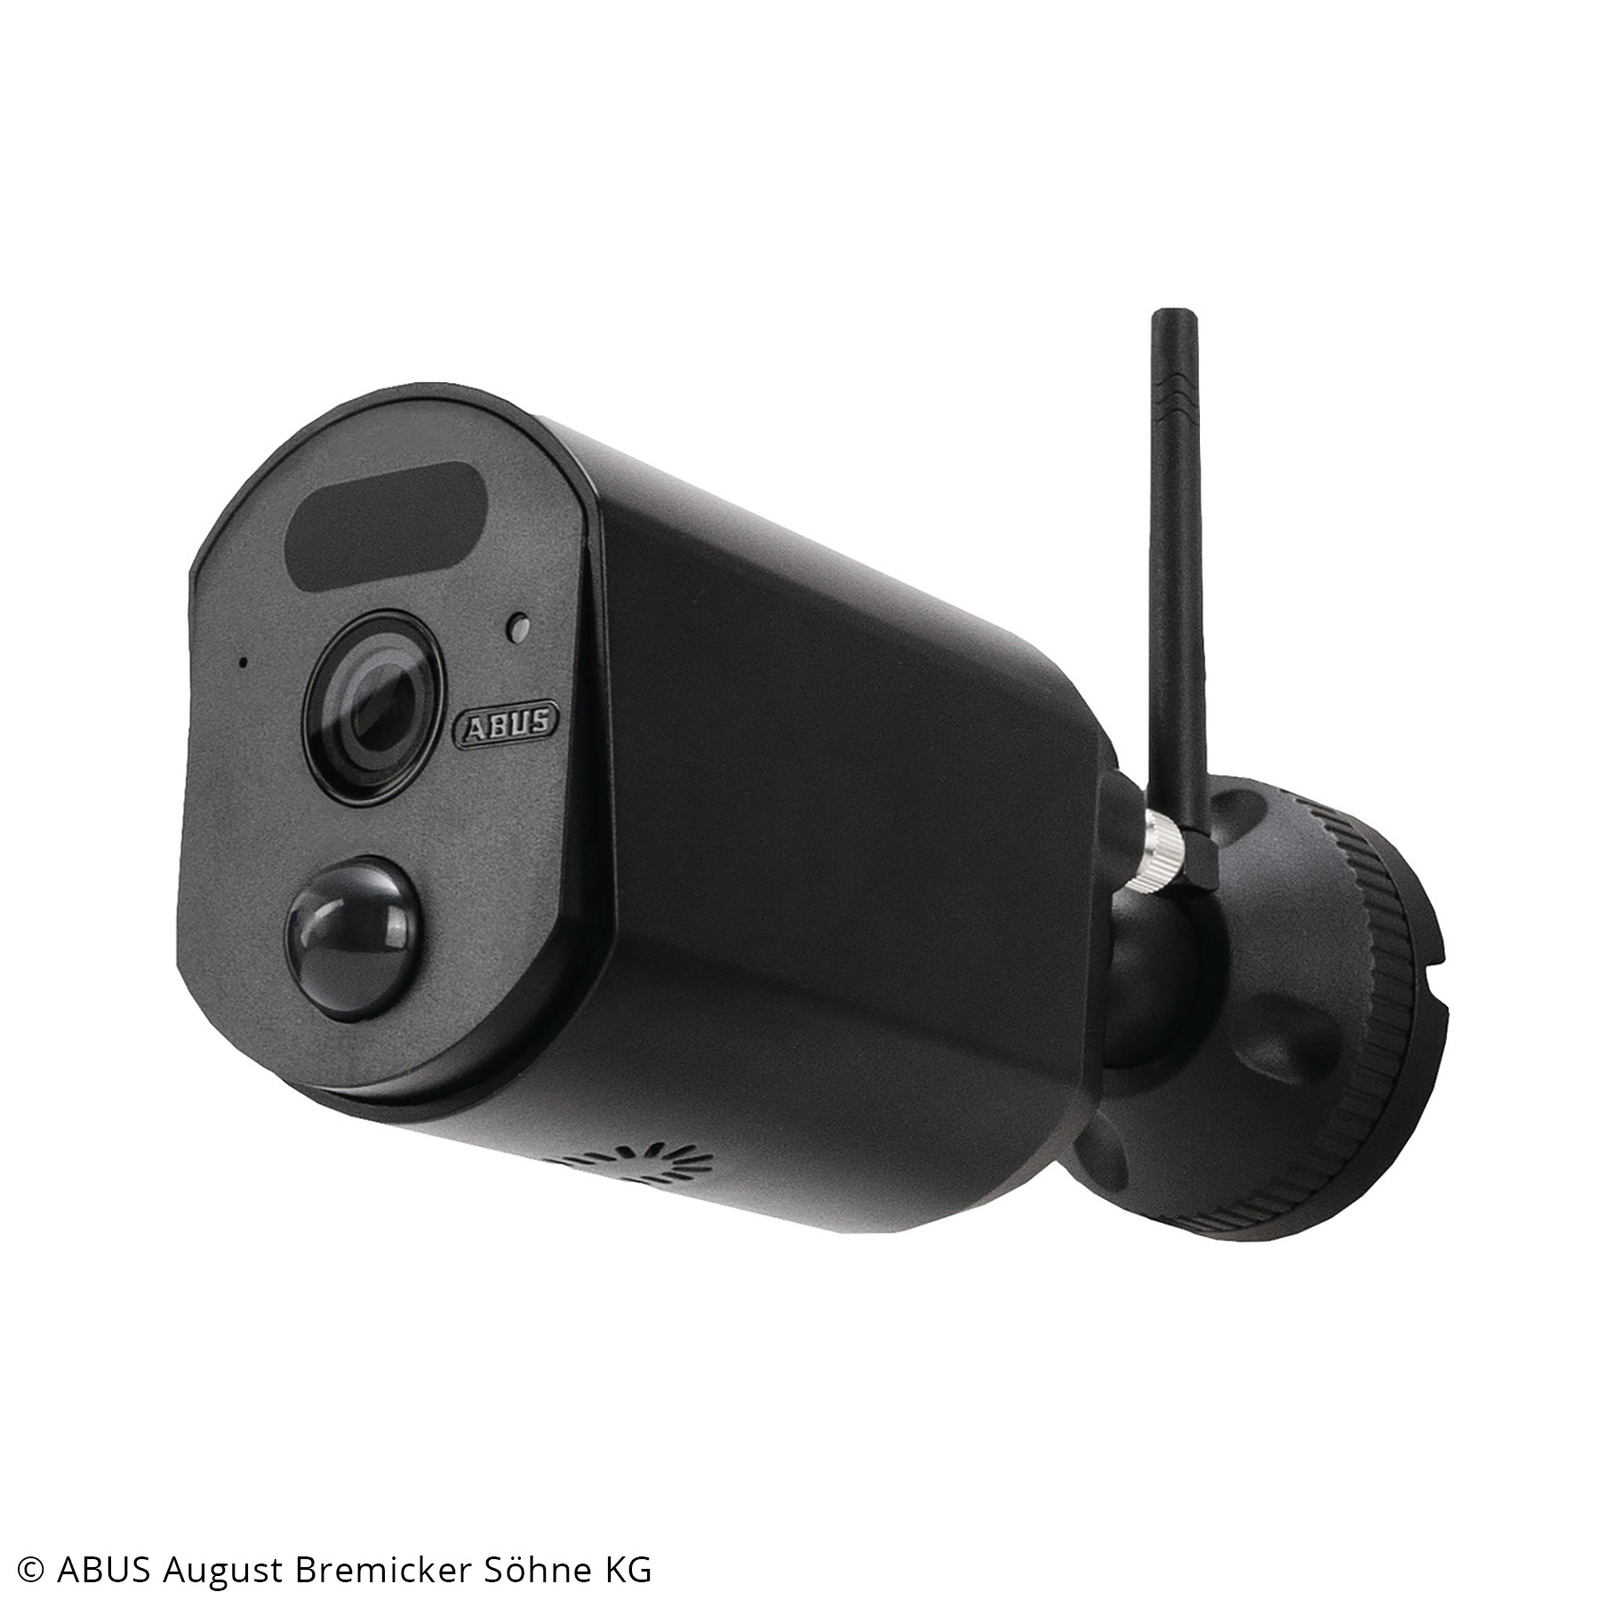 ABUS videocamera aggiuntiva per EasyLook BasicSet